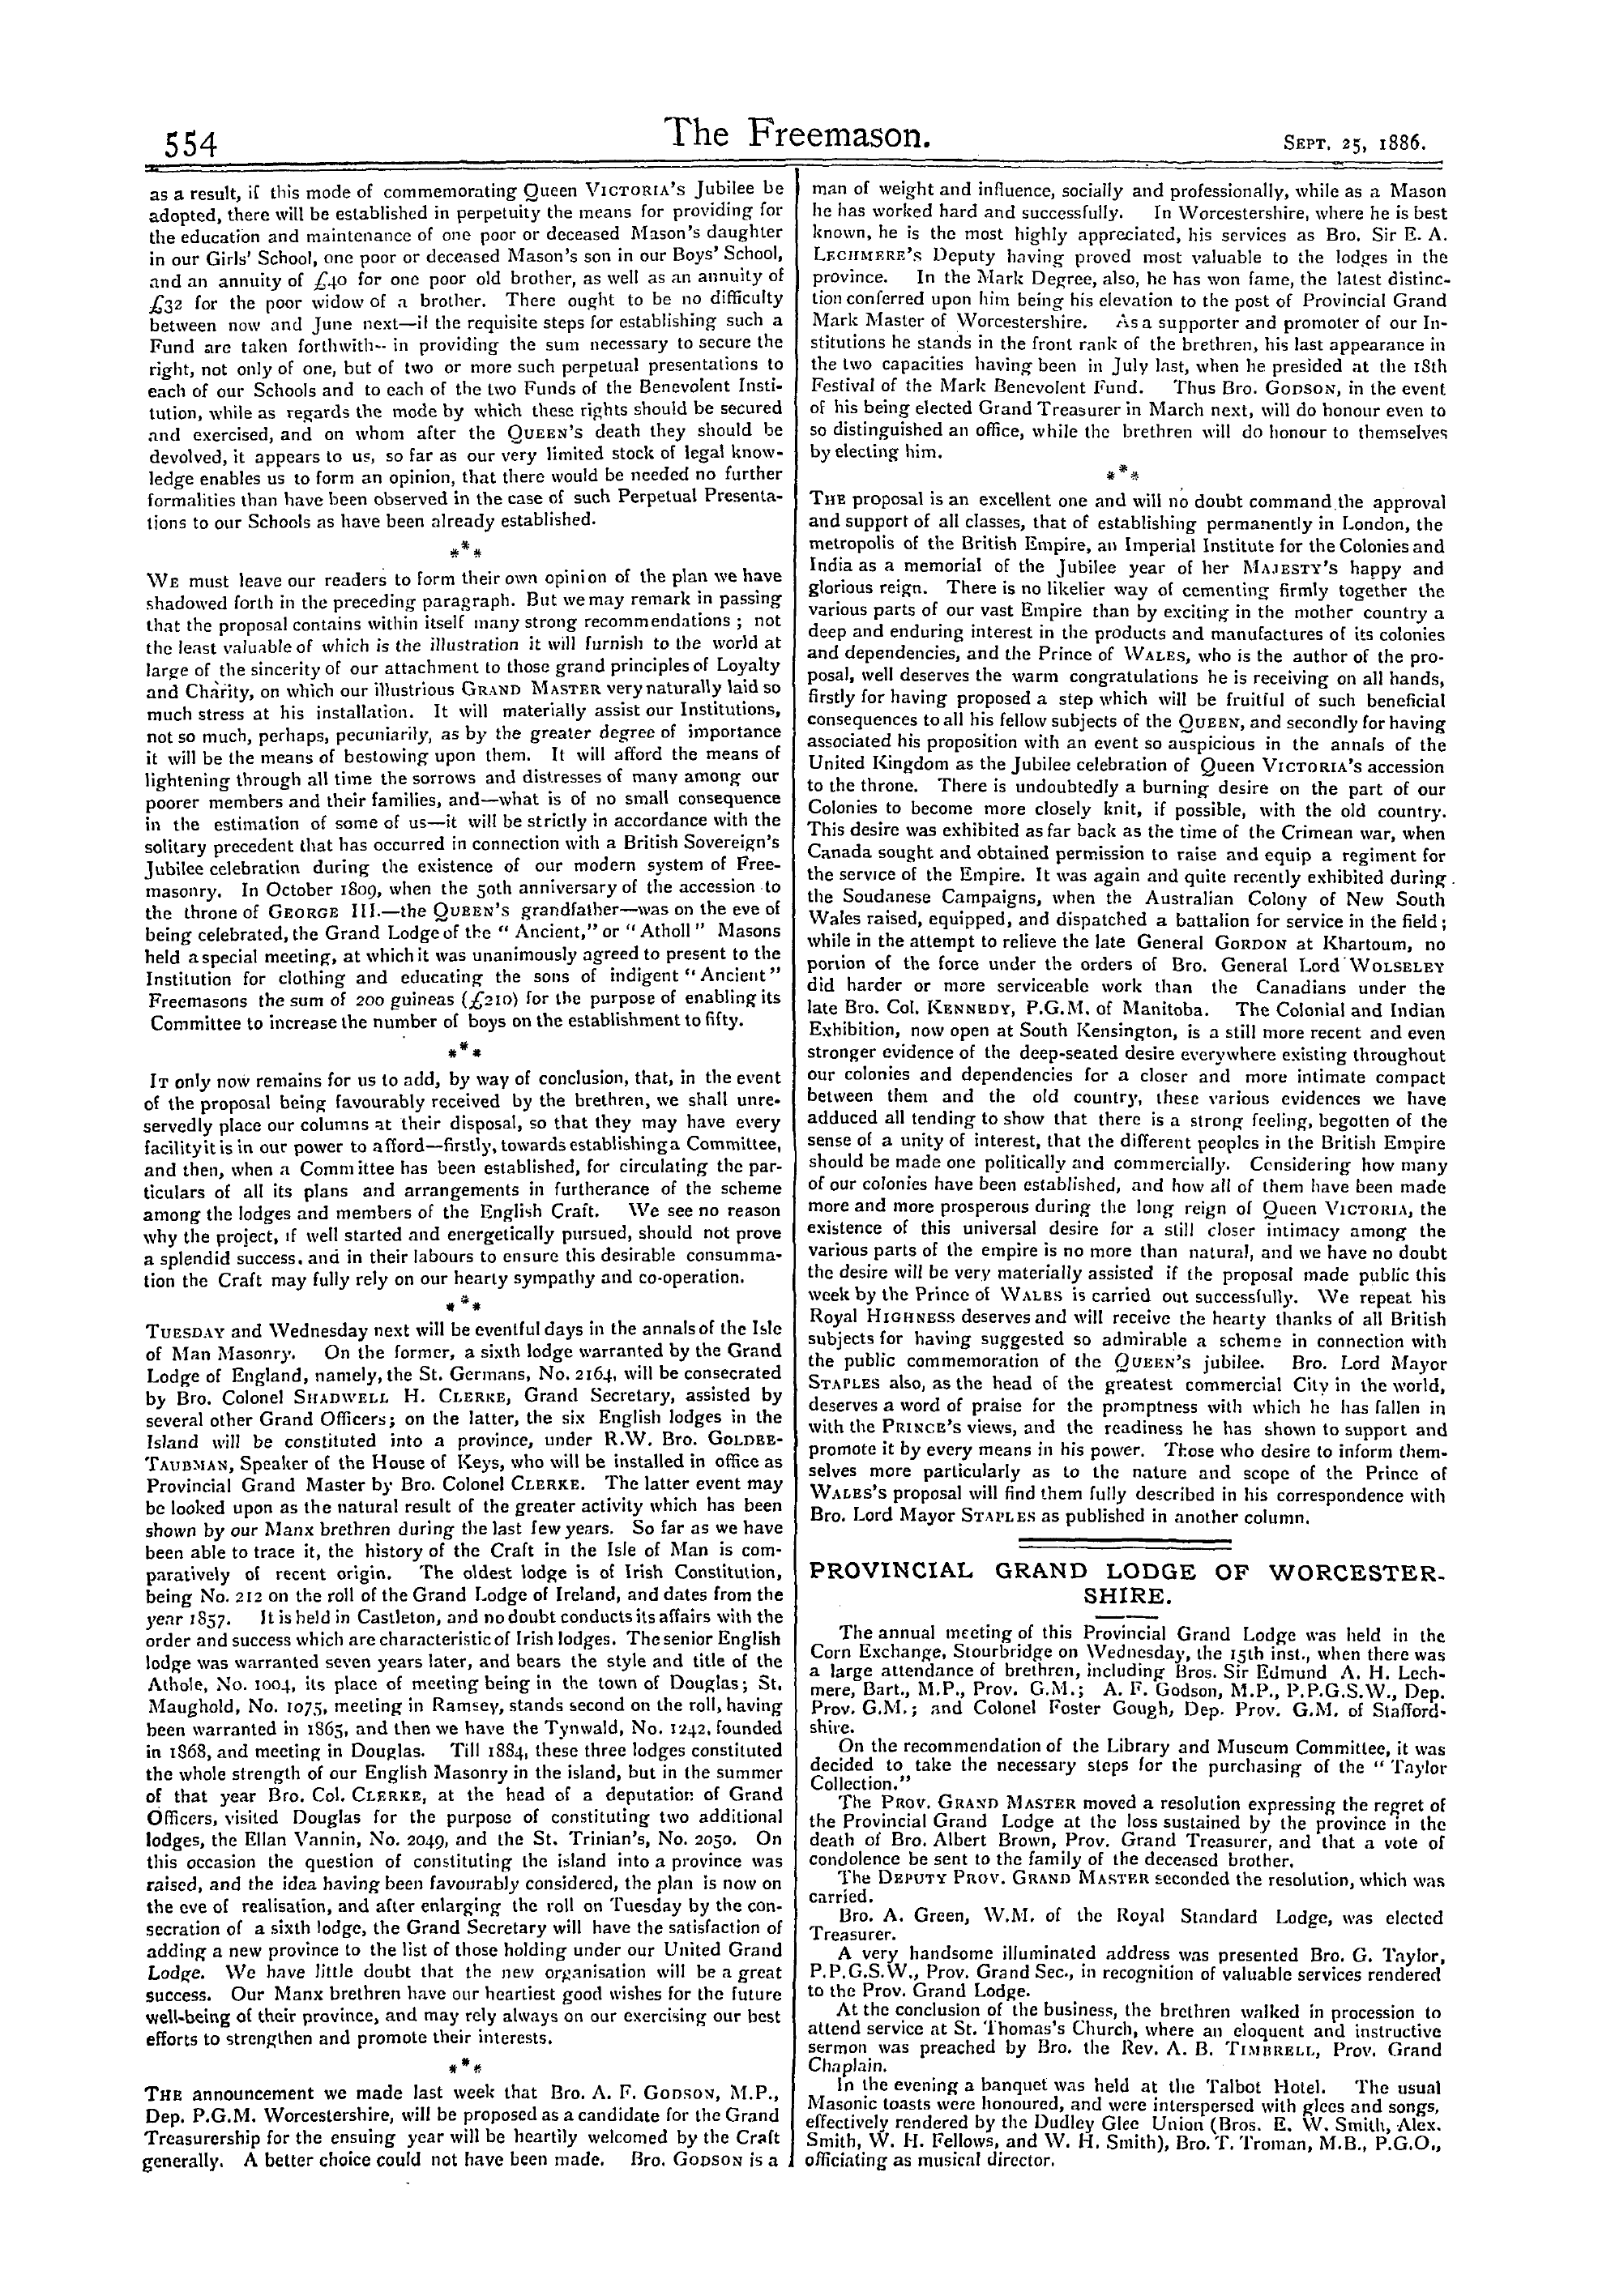 The Freemason: 1886-09-25: 2